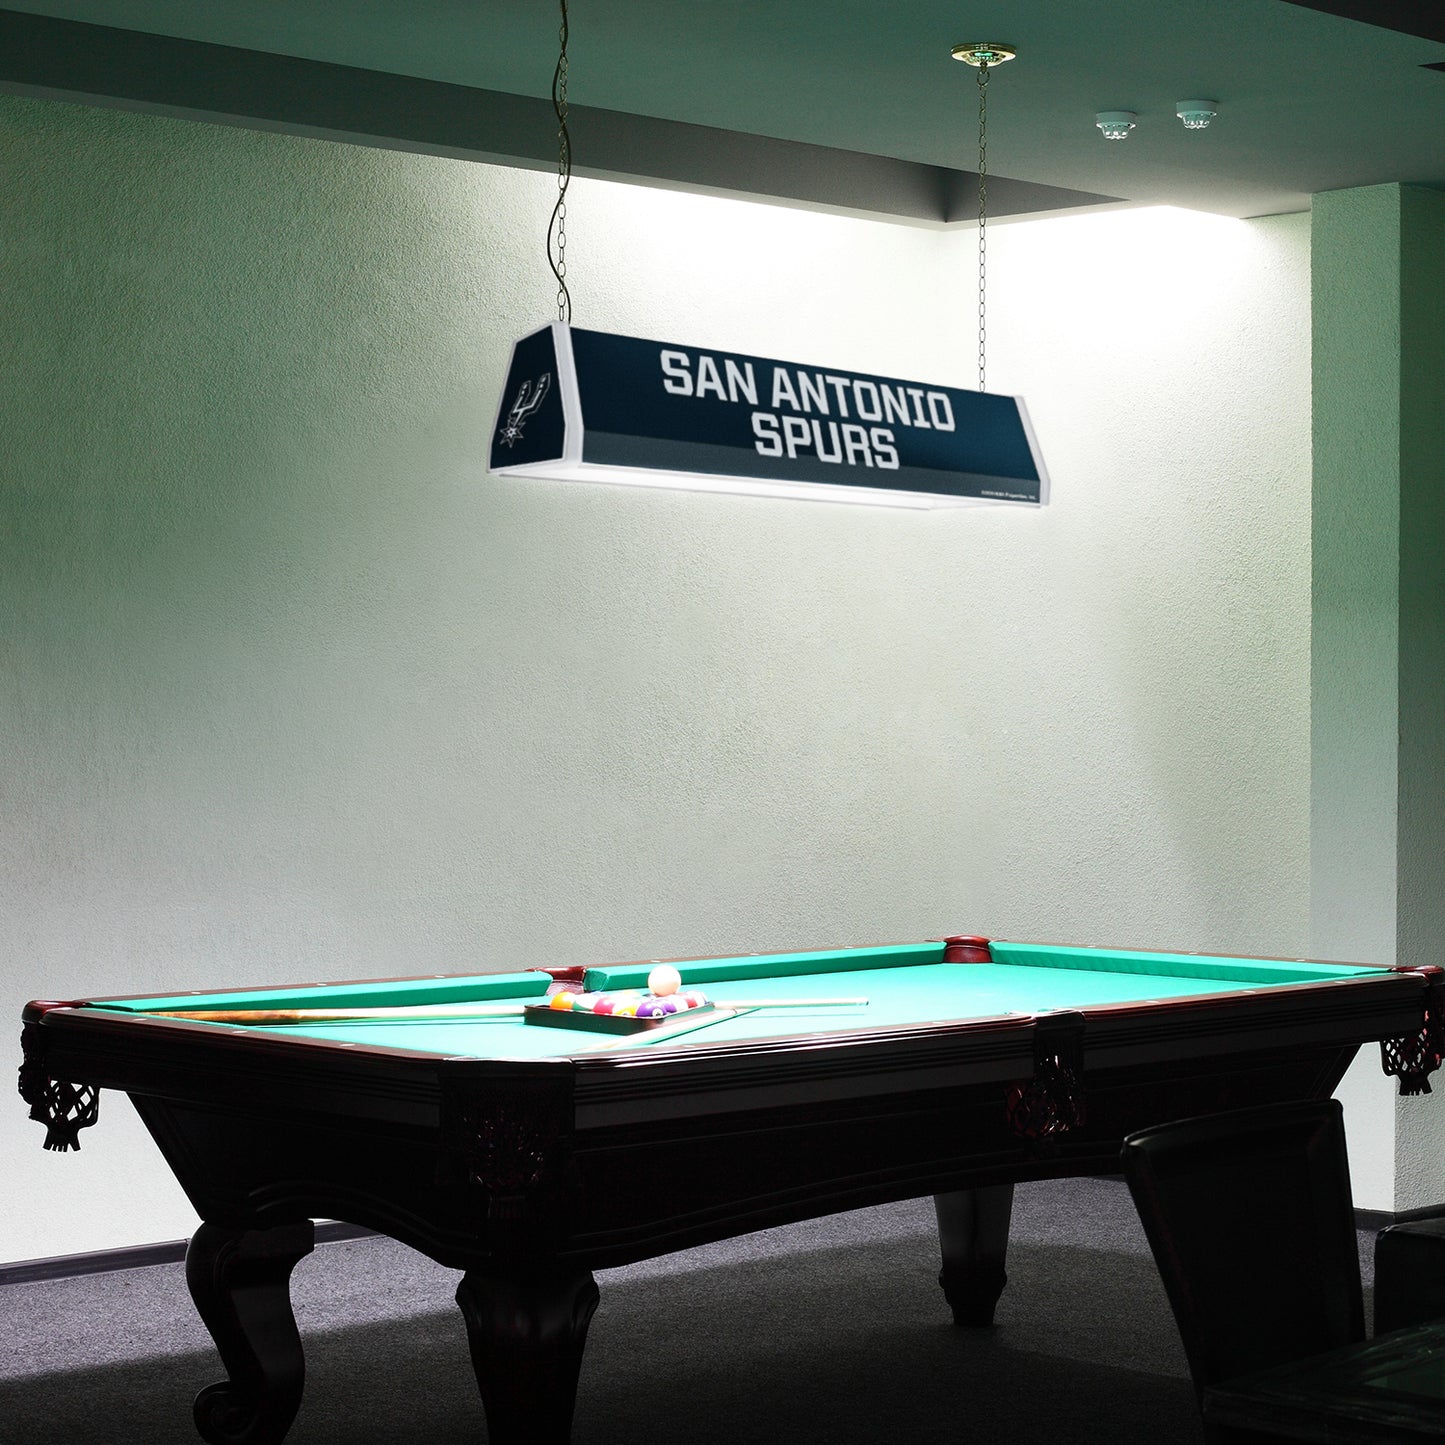 San Antonio Spurs Standard Pool Table Light Room View